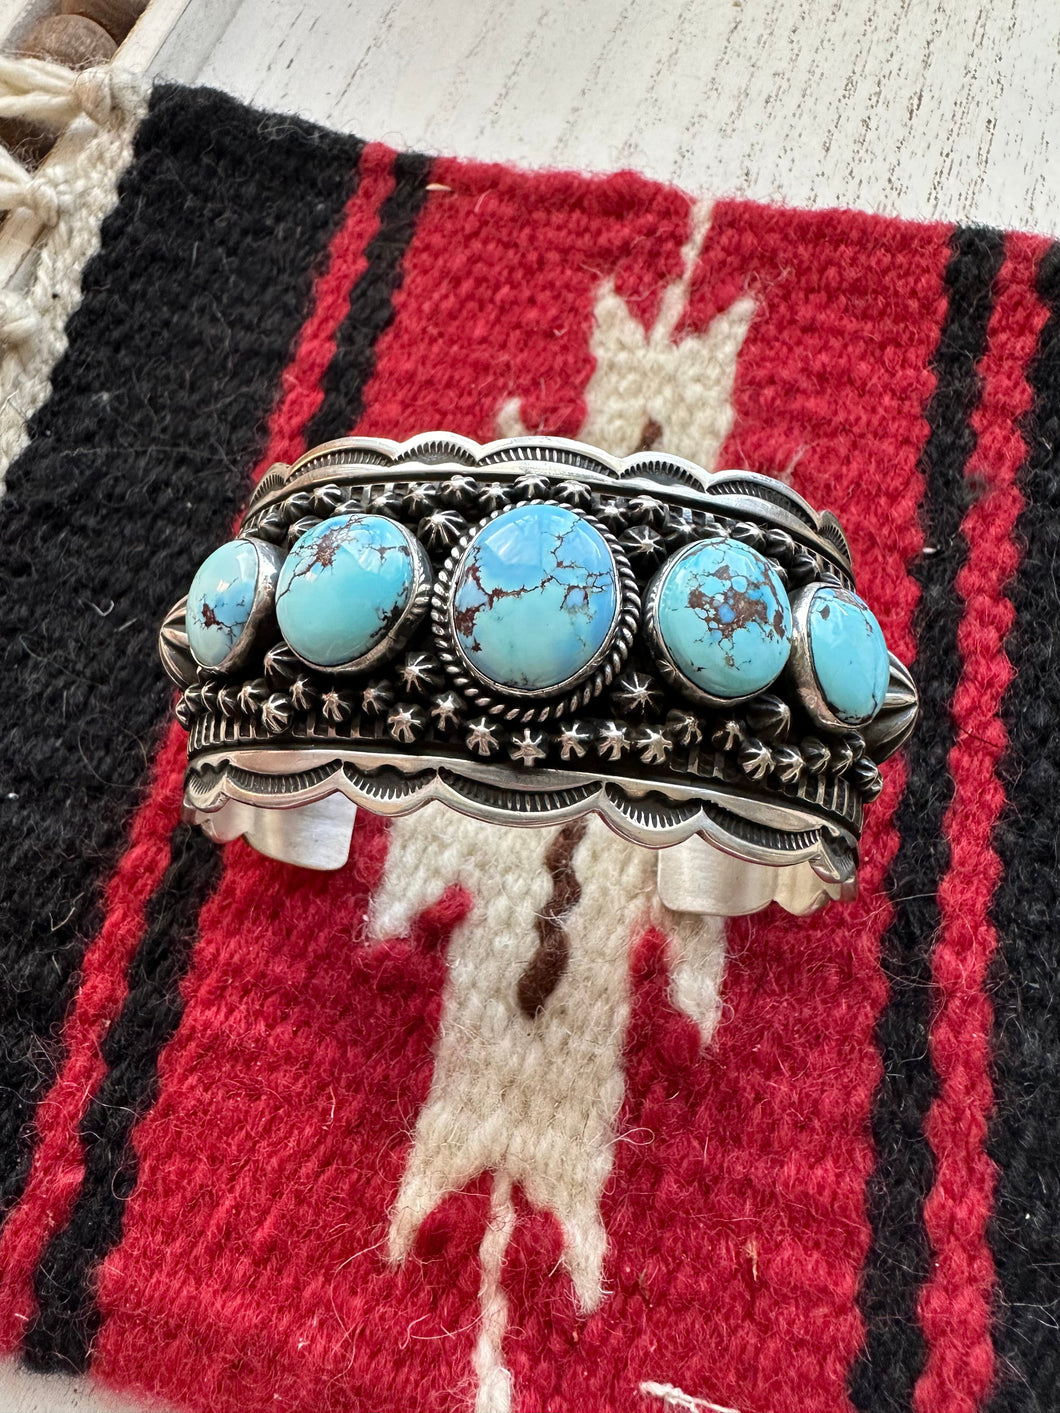 Navajo Golden Hills Turquoise & Sterling Silver Cuff Bracelet Signed